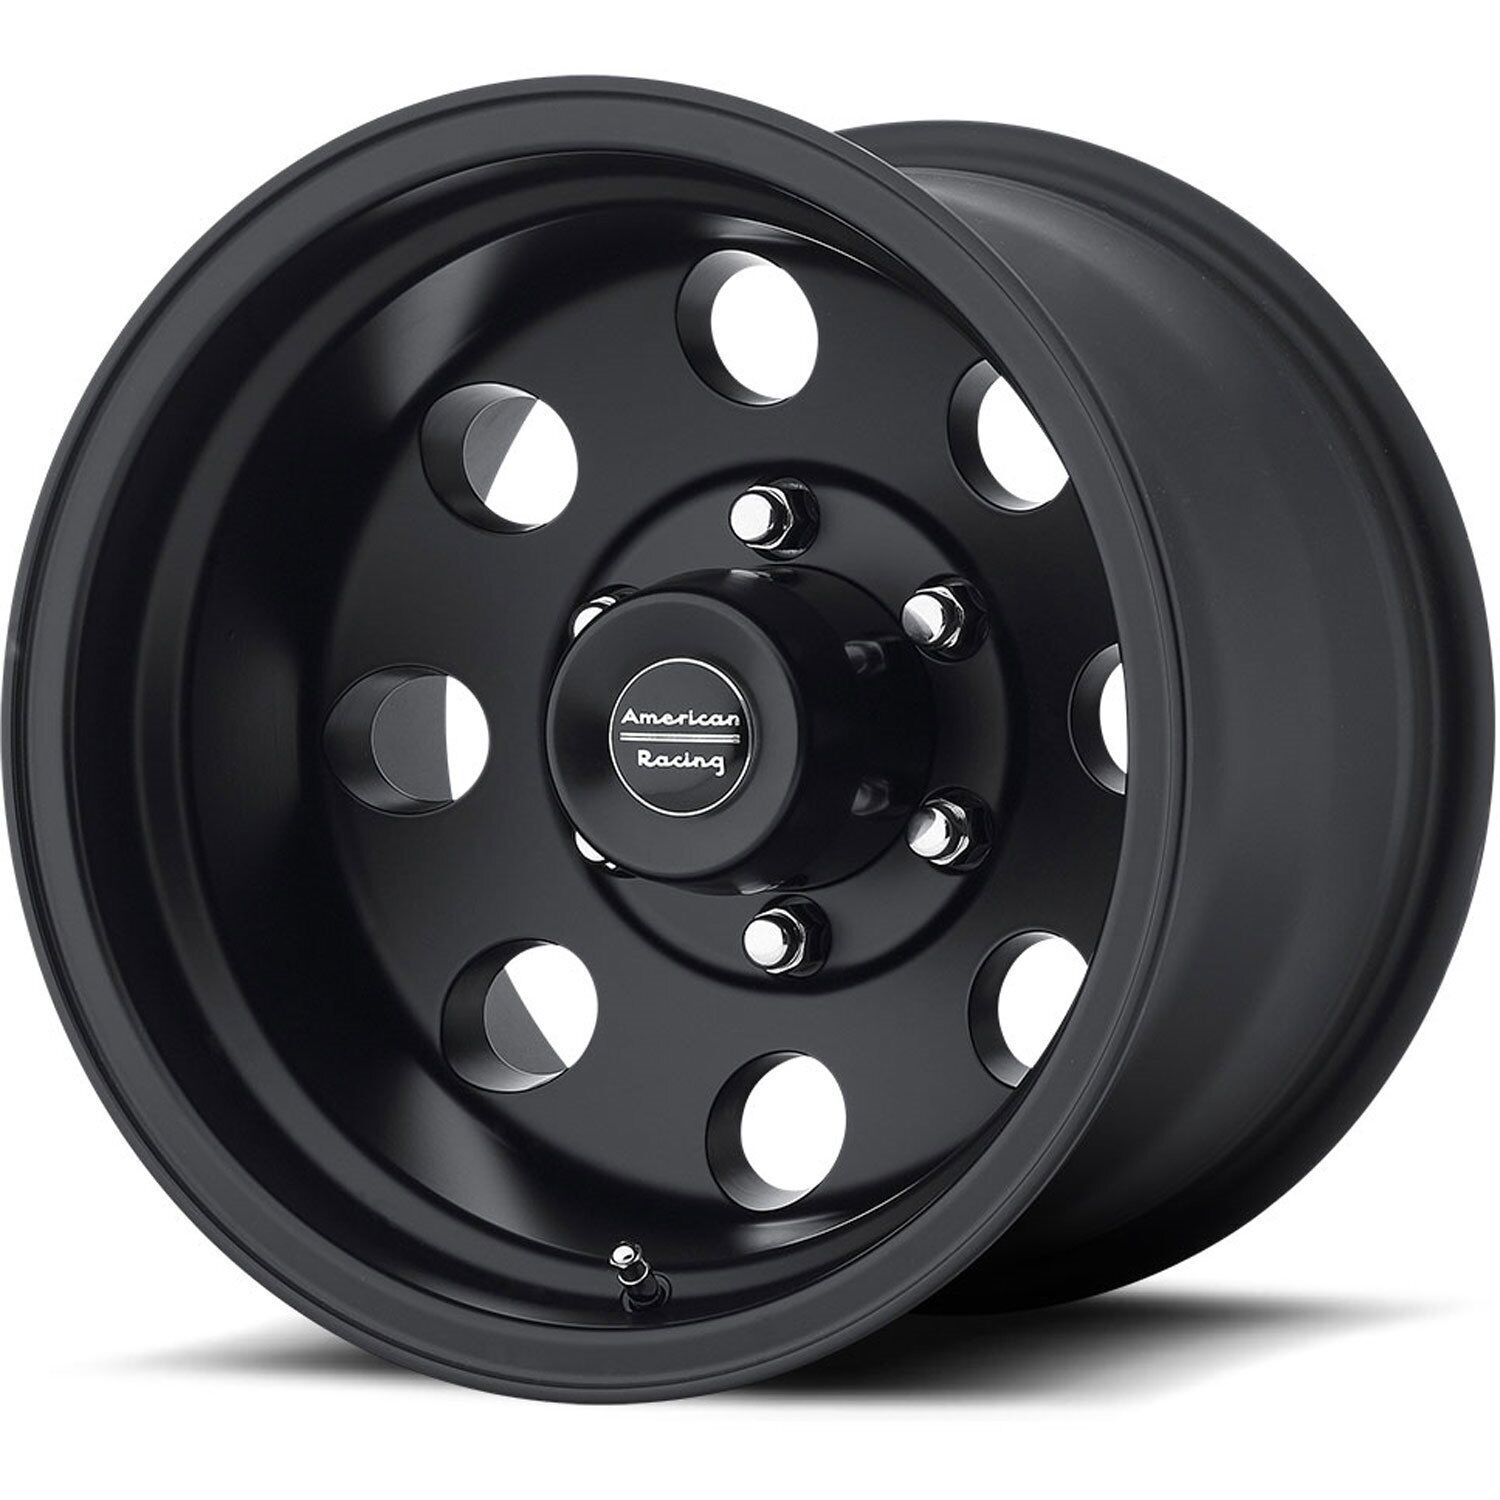 Wheel Pros 1725173B AR172 Series Baja Wheel Size: 15 x 10 Bolt Circle: 5 x 5 Bac